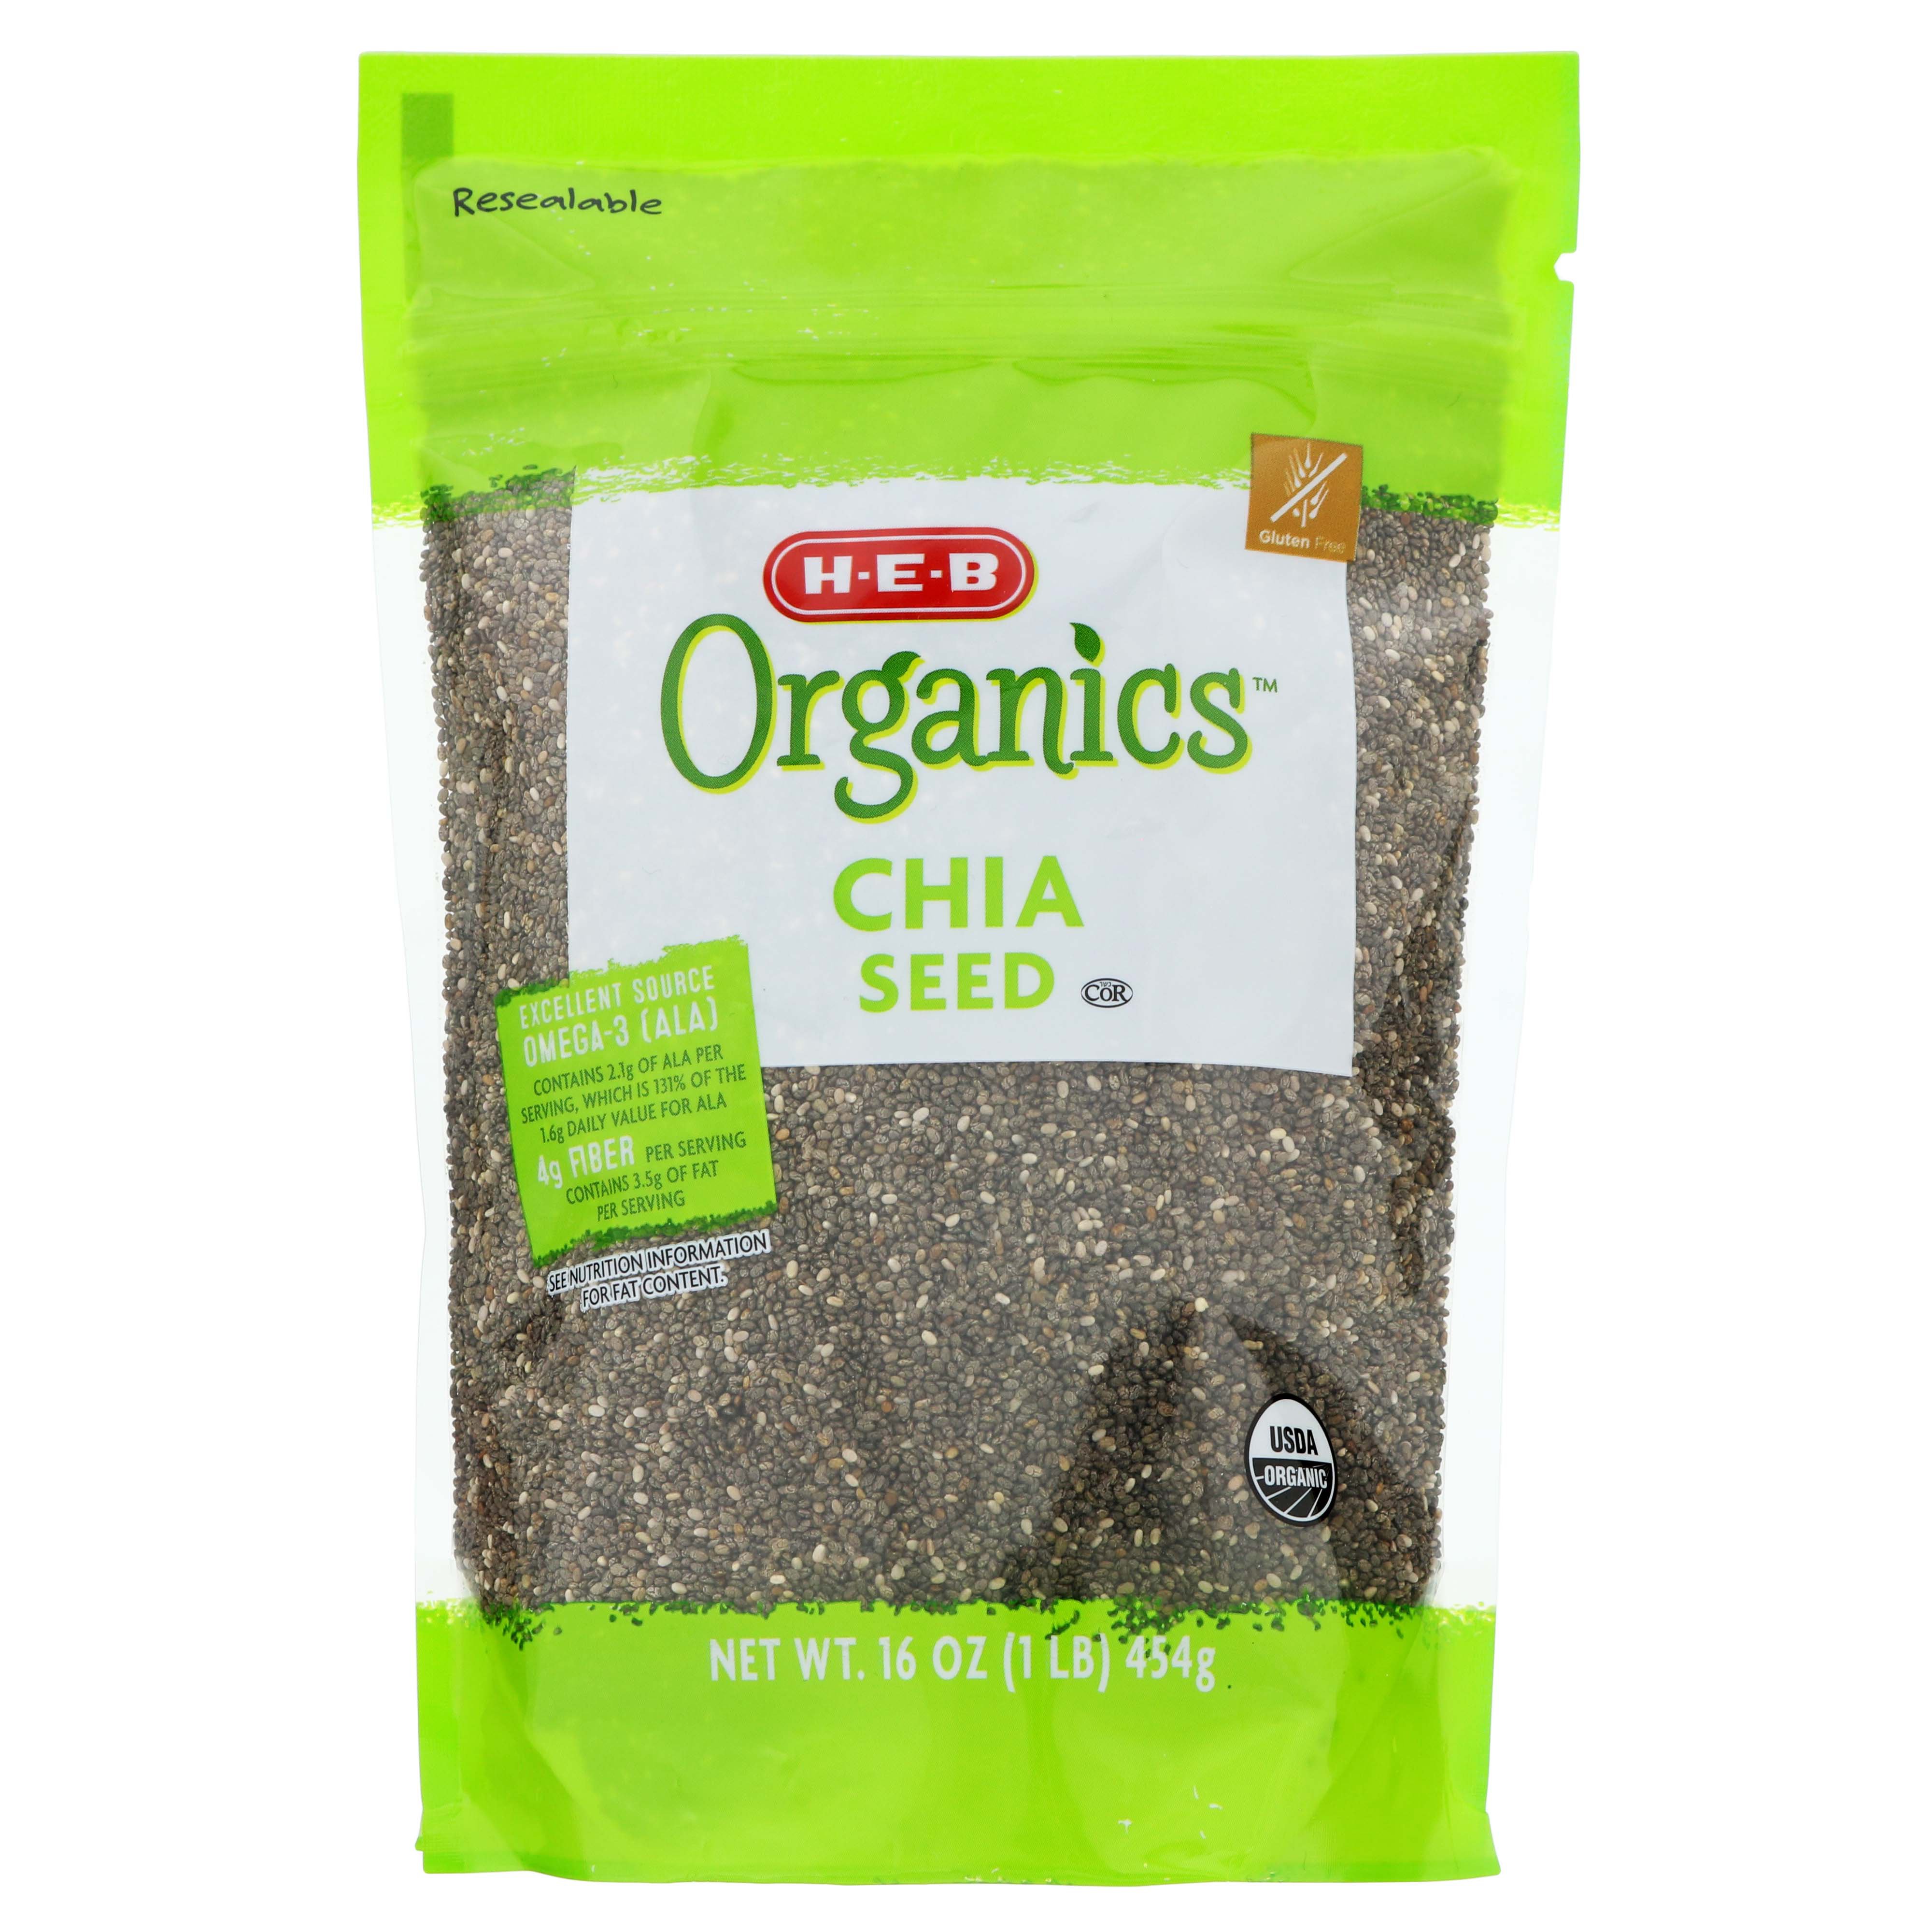 Versterken Sinis salto H-E-B Organics Chia Seeds - Shop Pasta & Rice at H-E-B